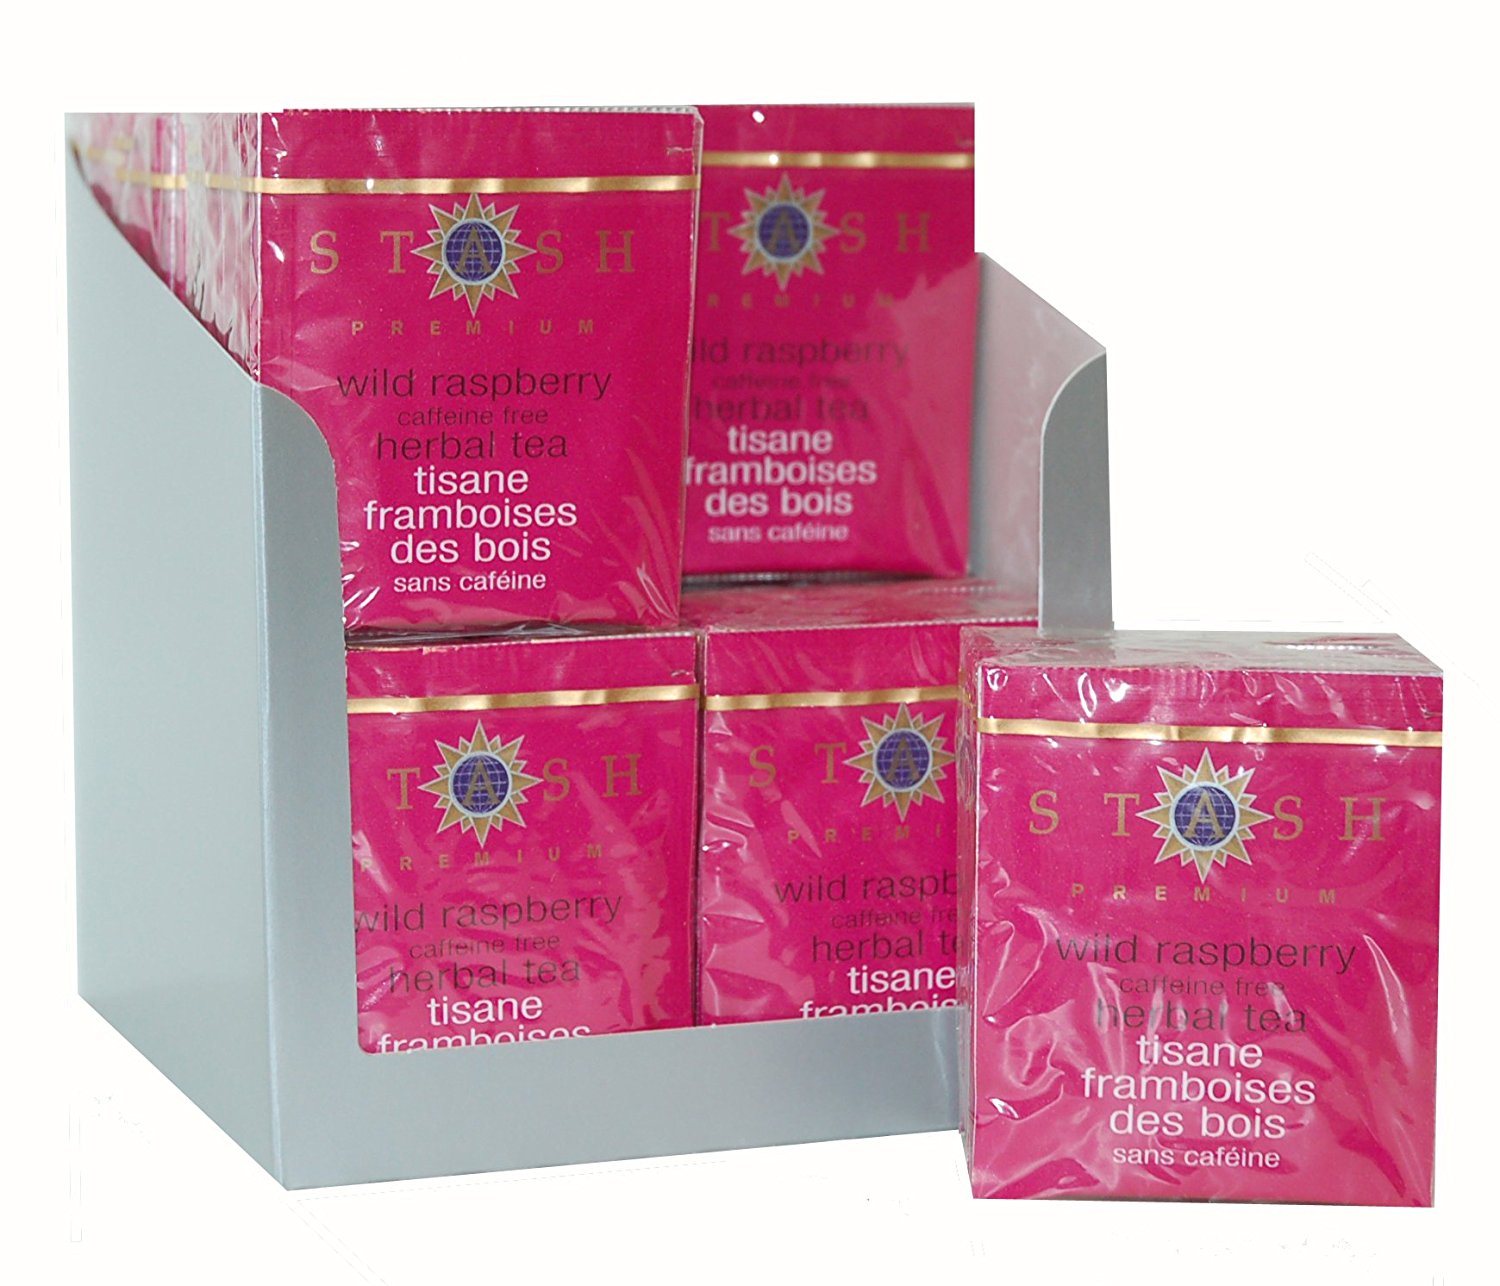 Stash Tea Licorice Spice Herbal Tea, 10 Count Tea Bags in Foil (Pack of ...